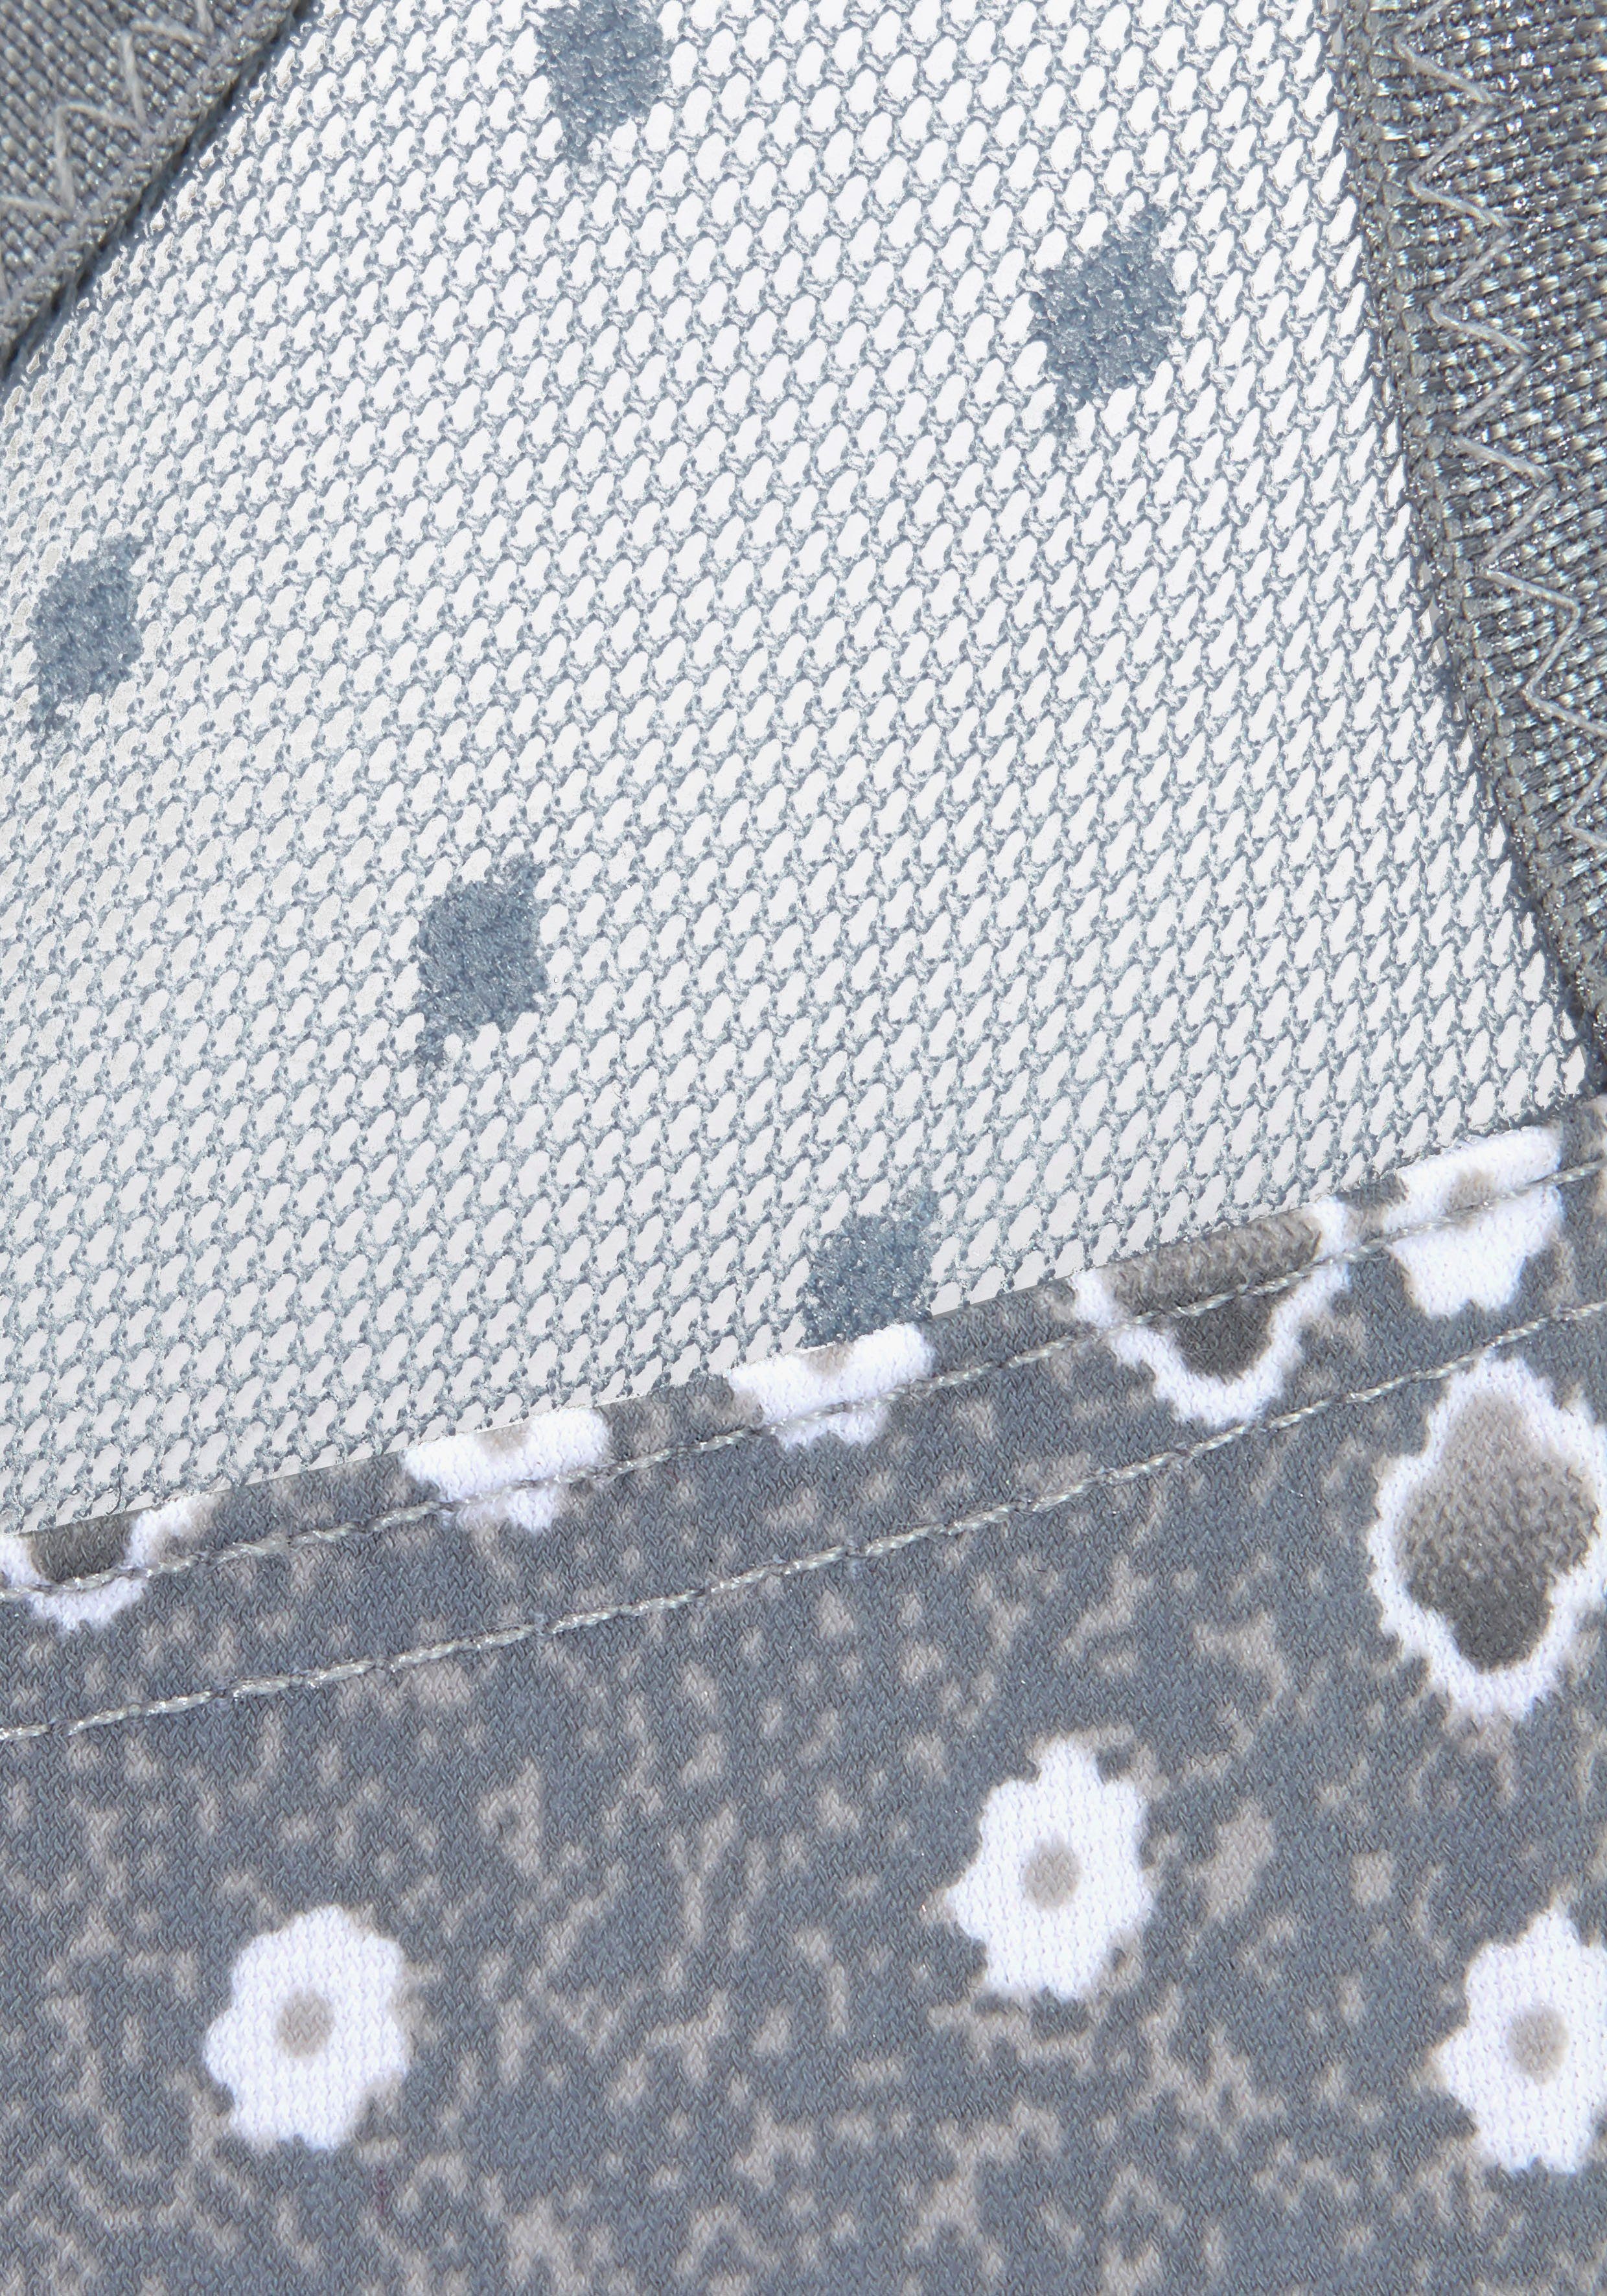 Minimizer-BH transparentem und Dessous im Obercup, Bügel mit Nuance Basic grau-bedruckt Tüll leicht